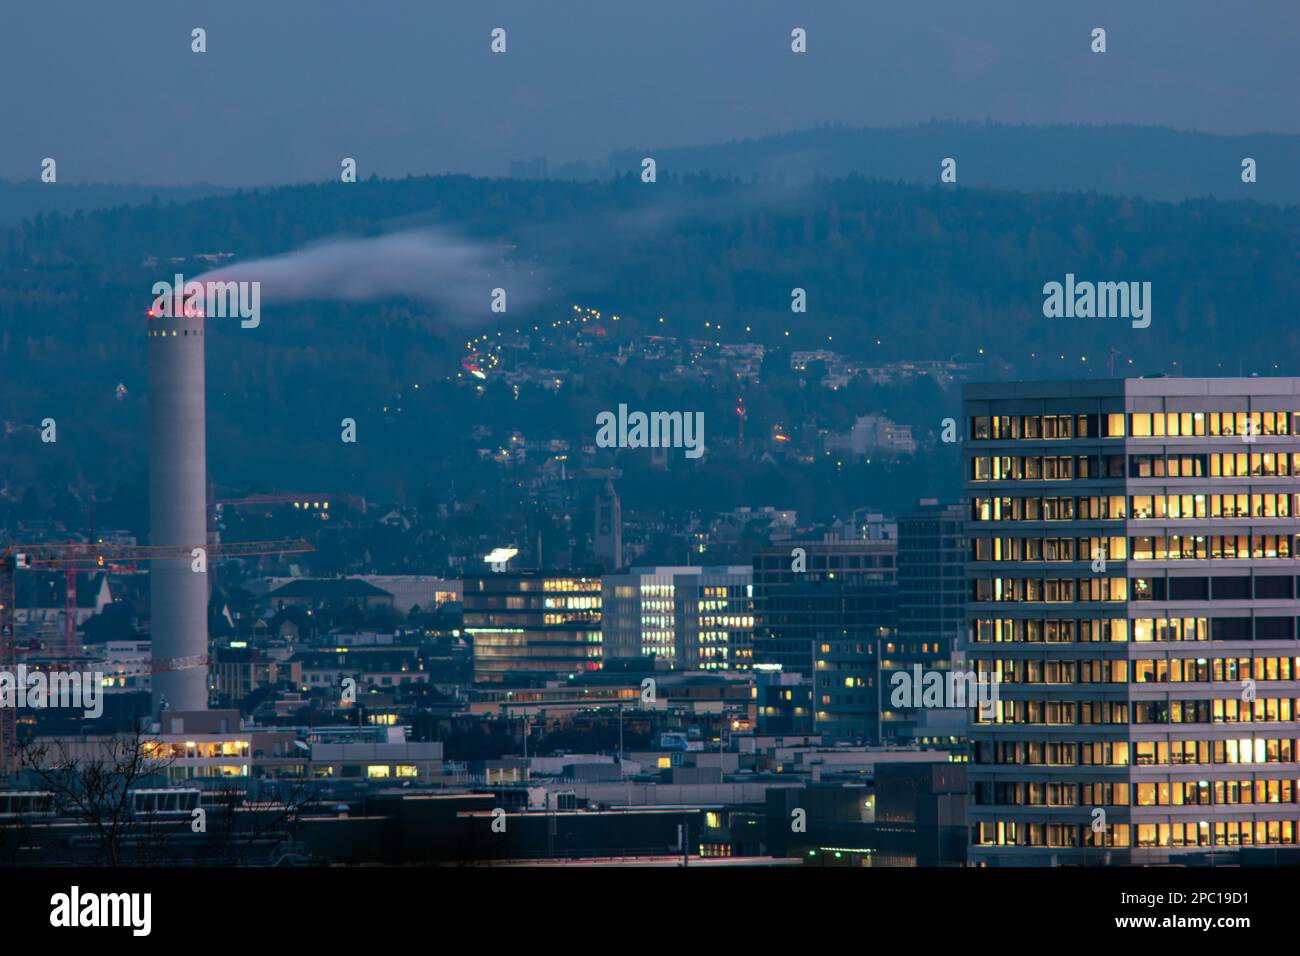 Tall smokestack or industrial chimney emitting white smoke or steam. Zurich city Switzerland. Late evening winter day, close-up telephoto shot.. Stock Photo